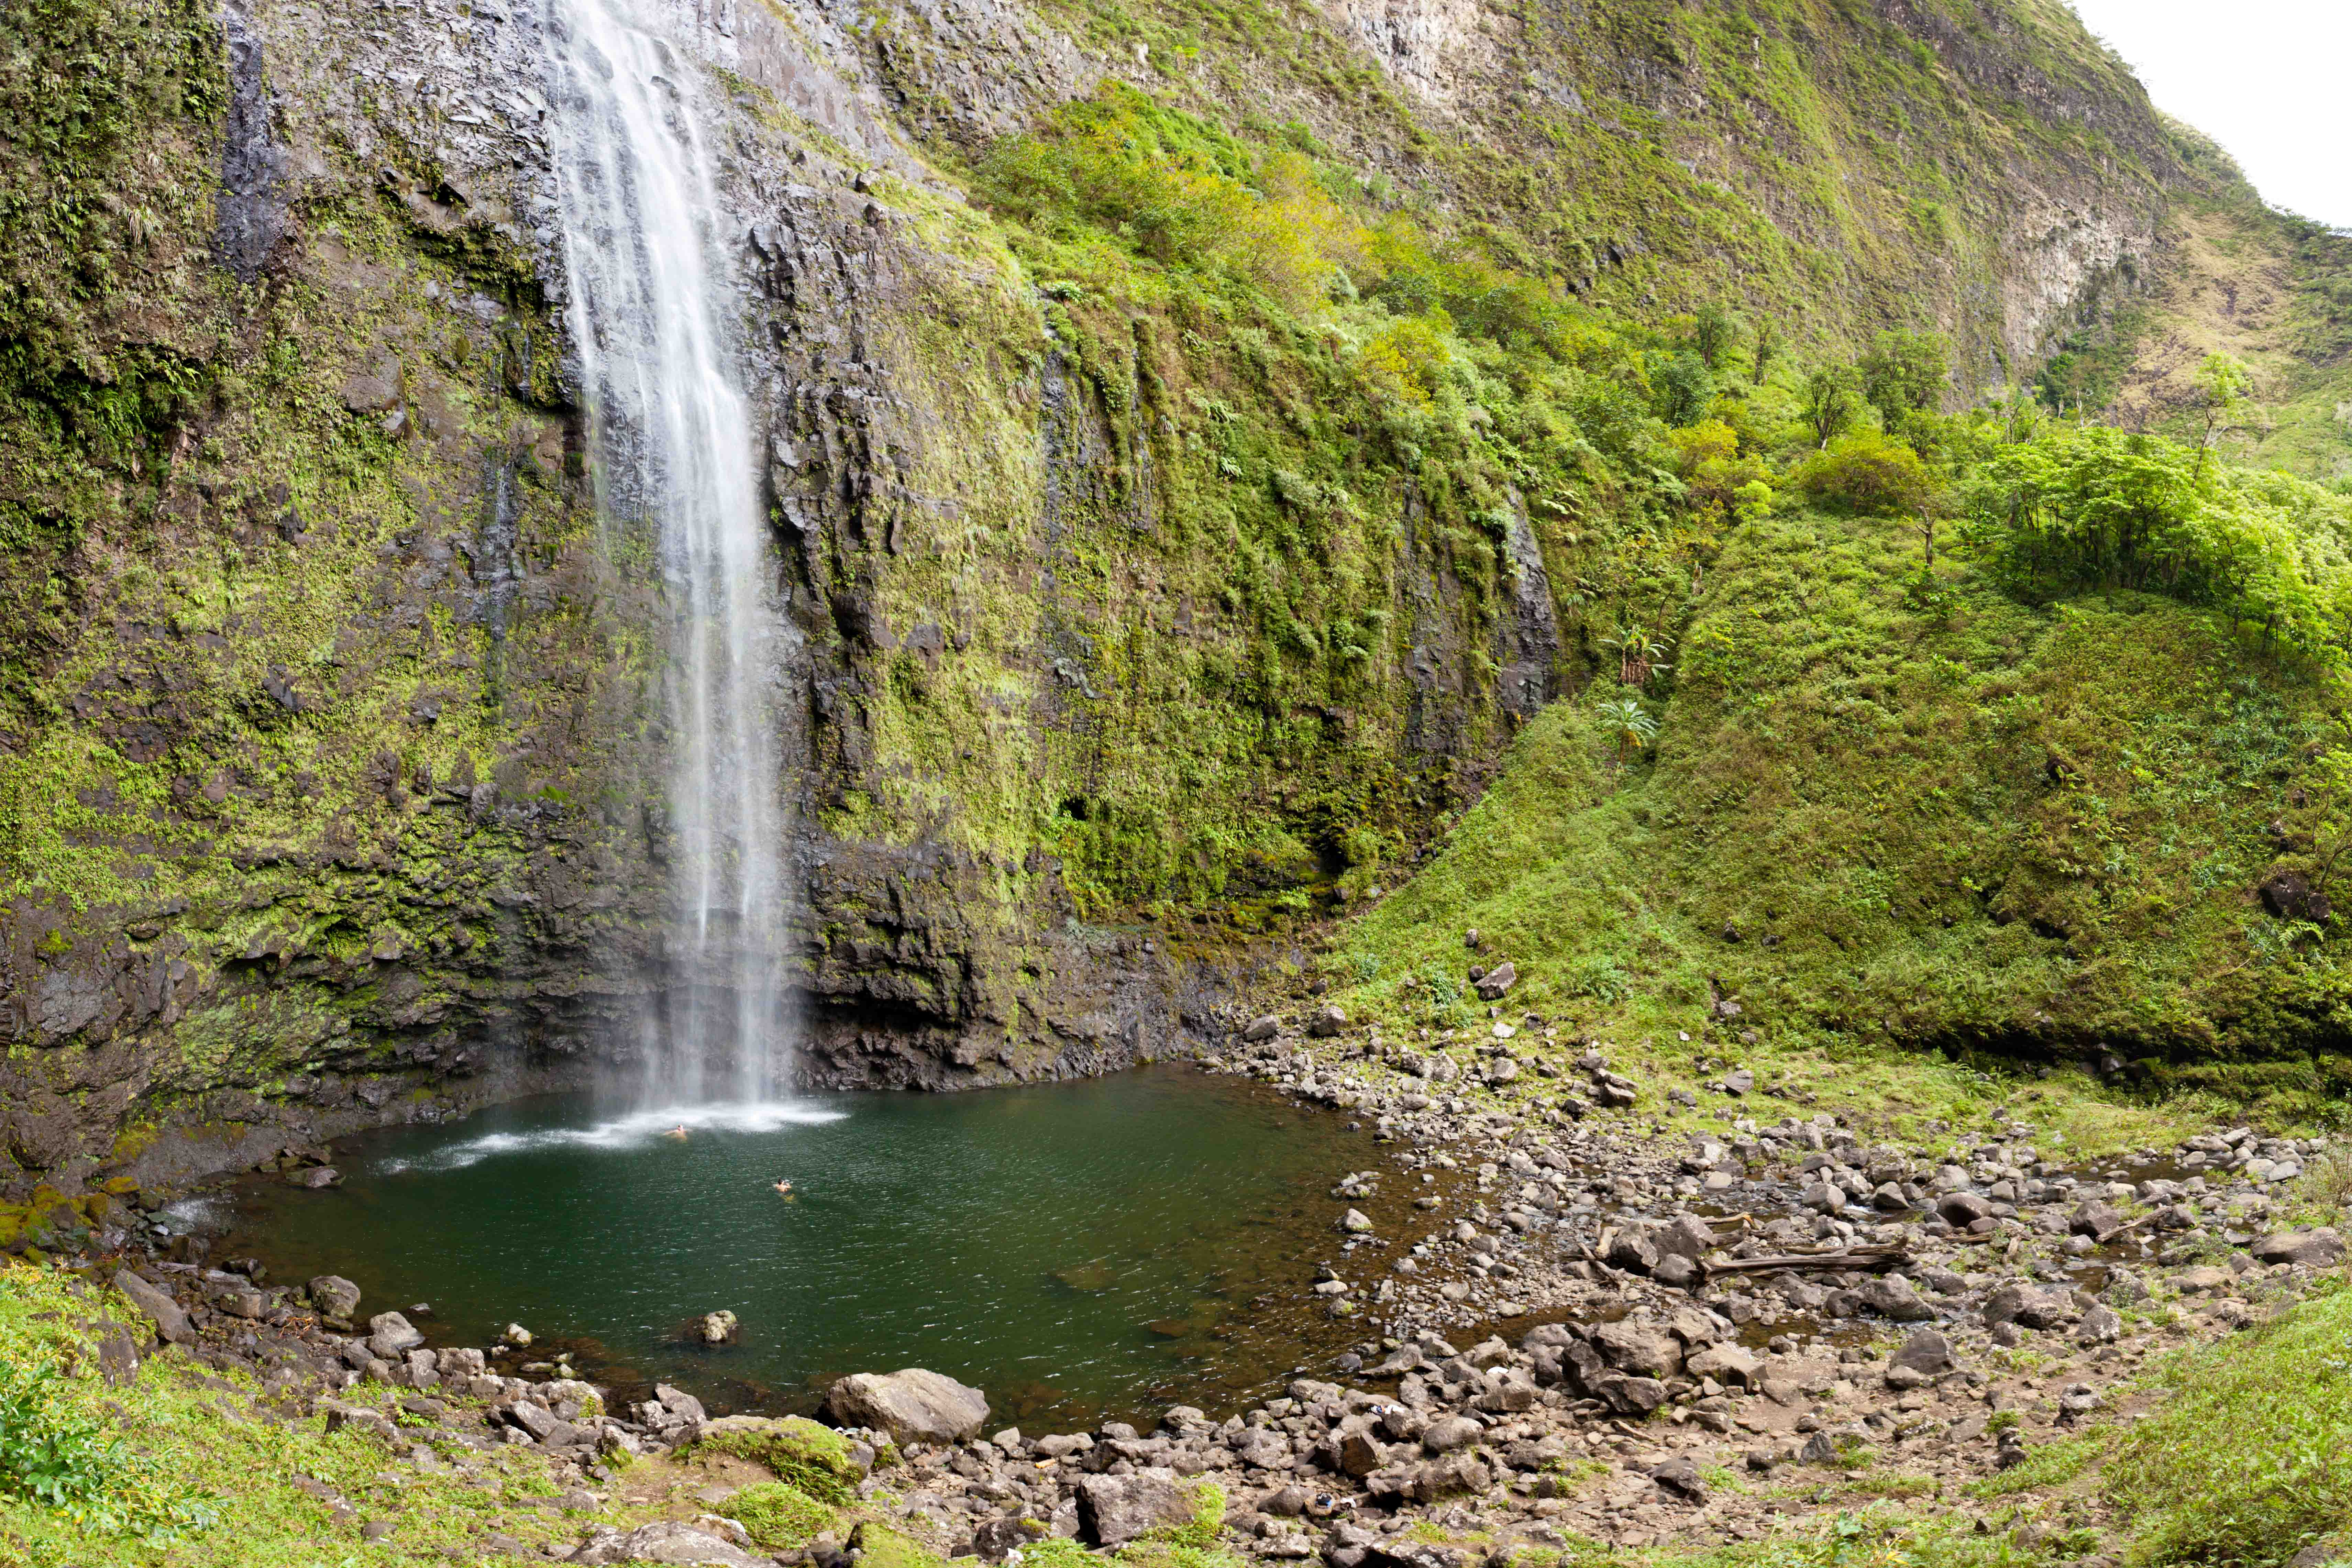 Remote Hanikapiʻai Falls hidden on the Island of Kaua‘i. Image by Michael Utech / Getty